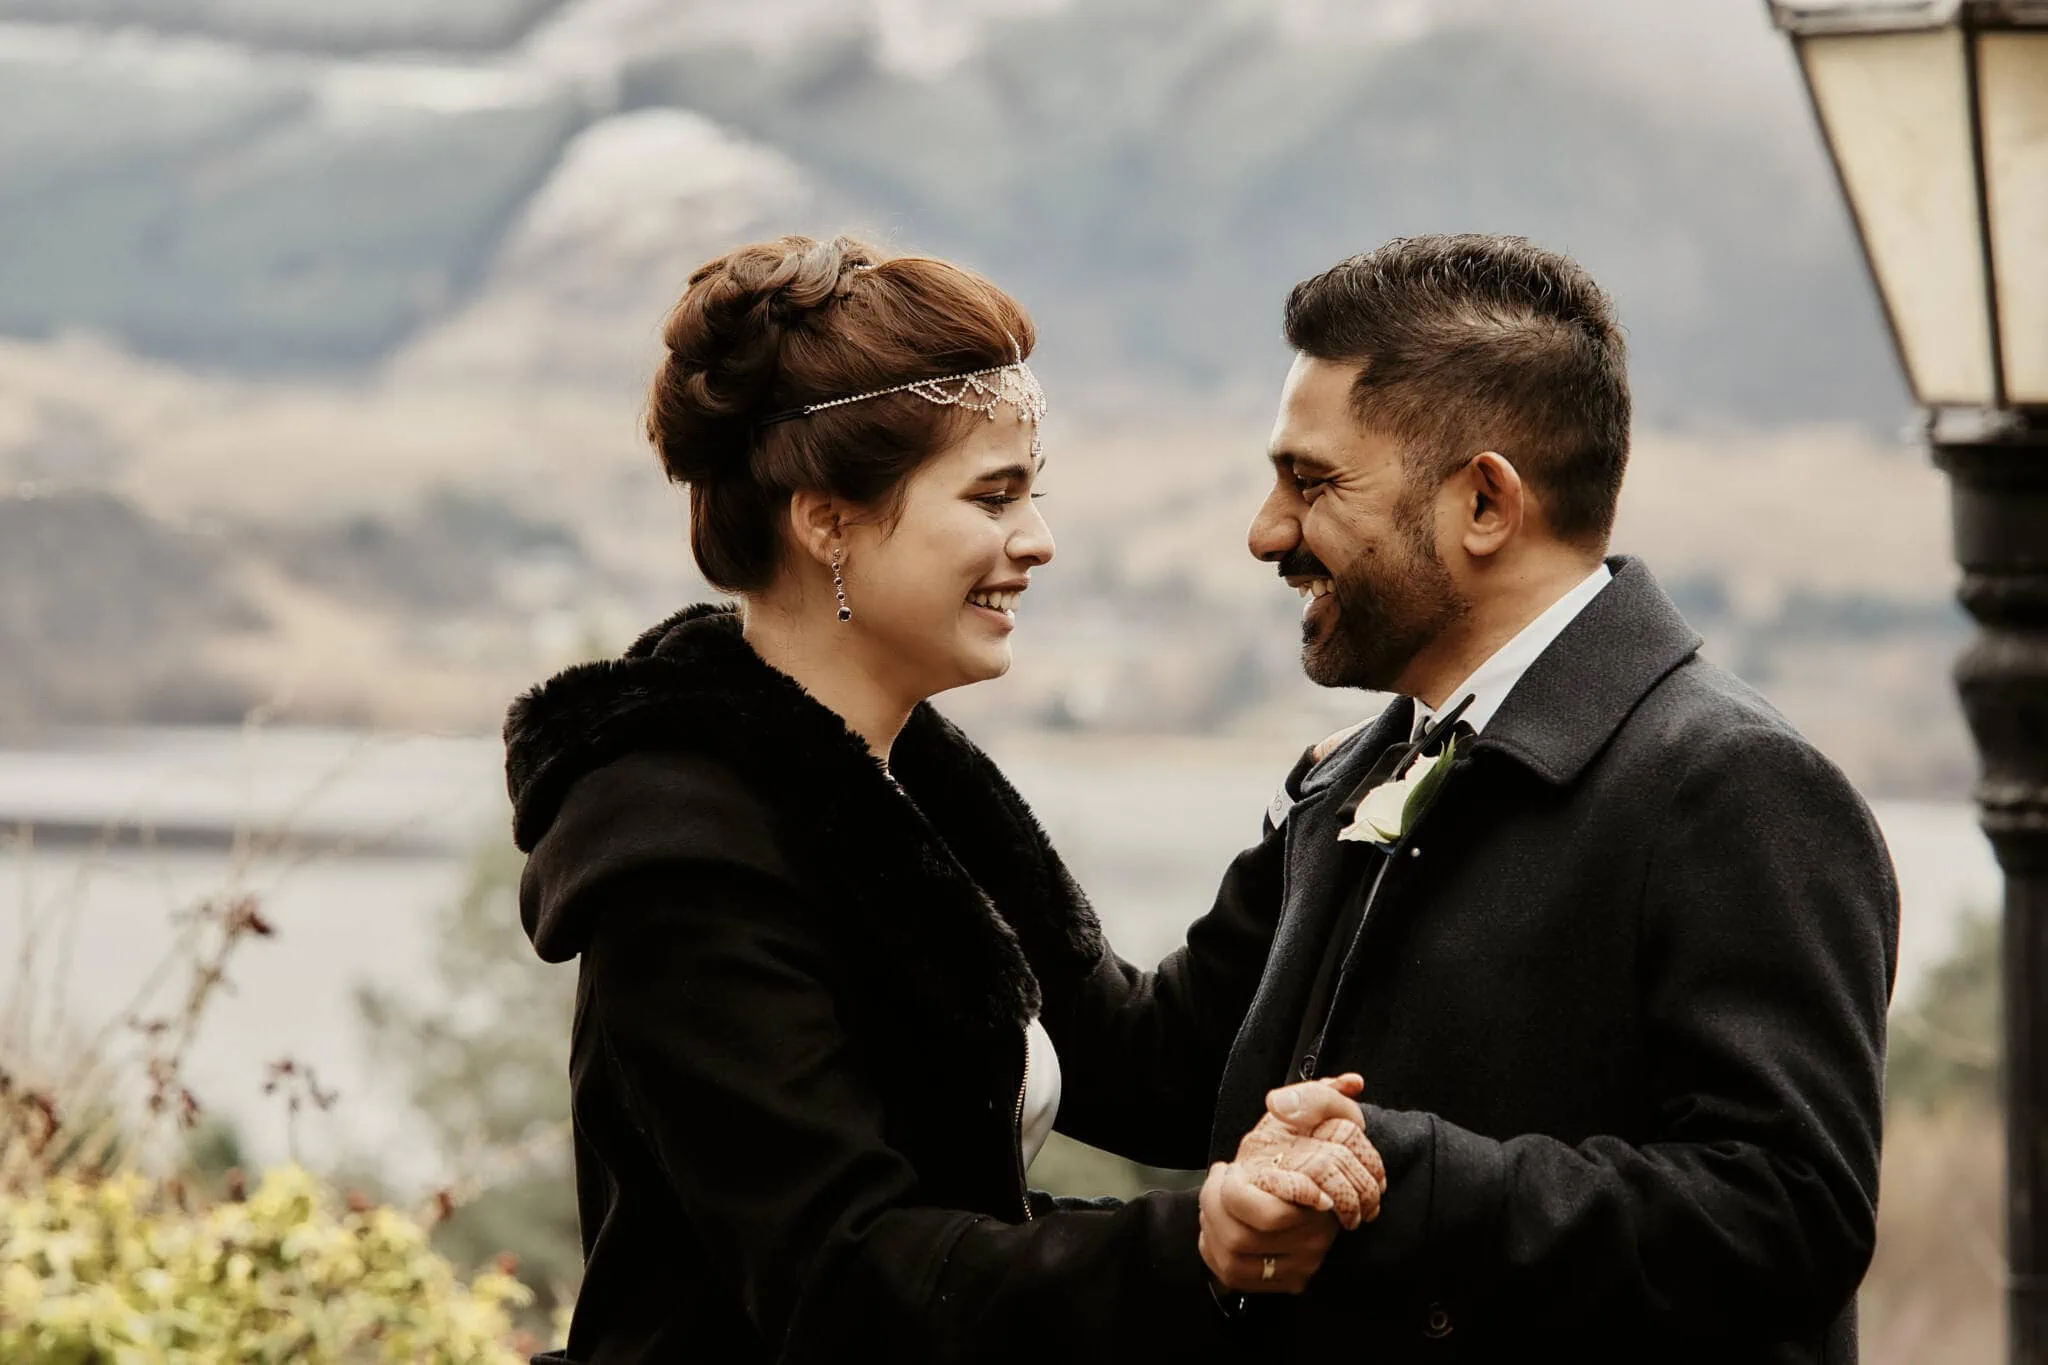 Queenstown New Zealand Elopement Wedding Photographer - Wasim and Yumn in a Queenstown Islamic Wedding, standing in front of a lamp post.